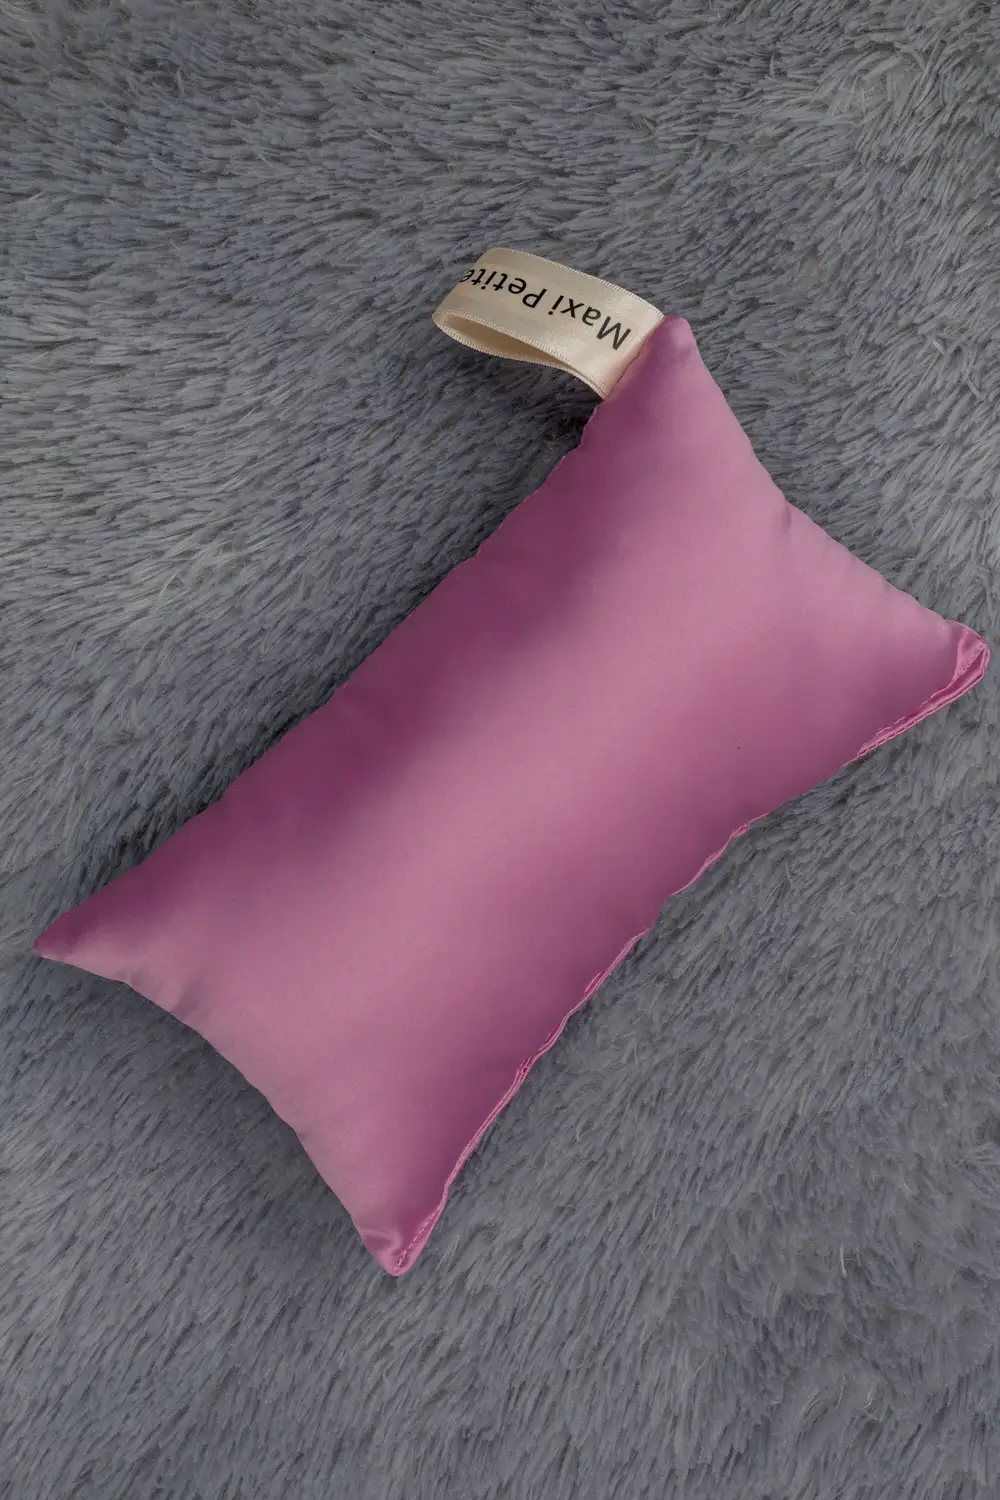 Purple colored silk pillow